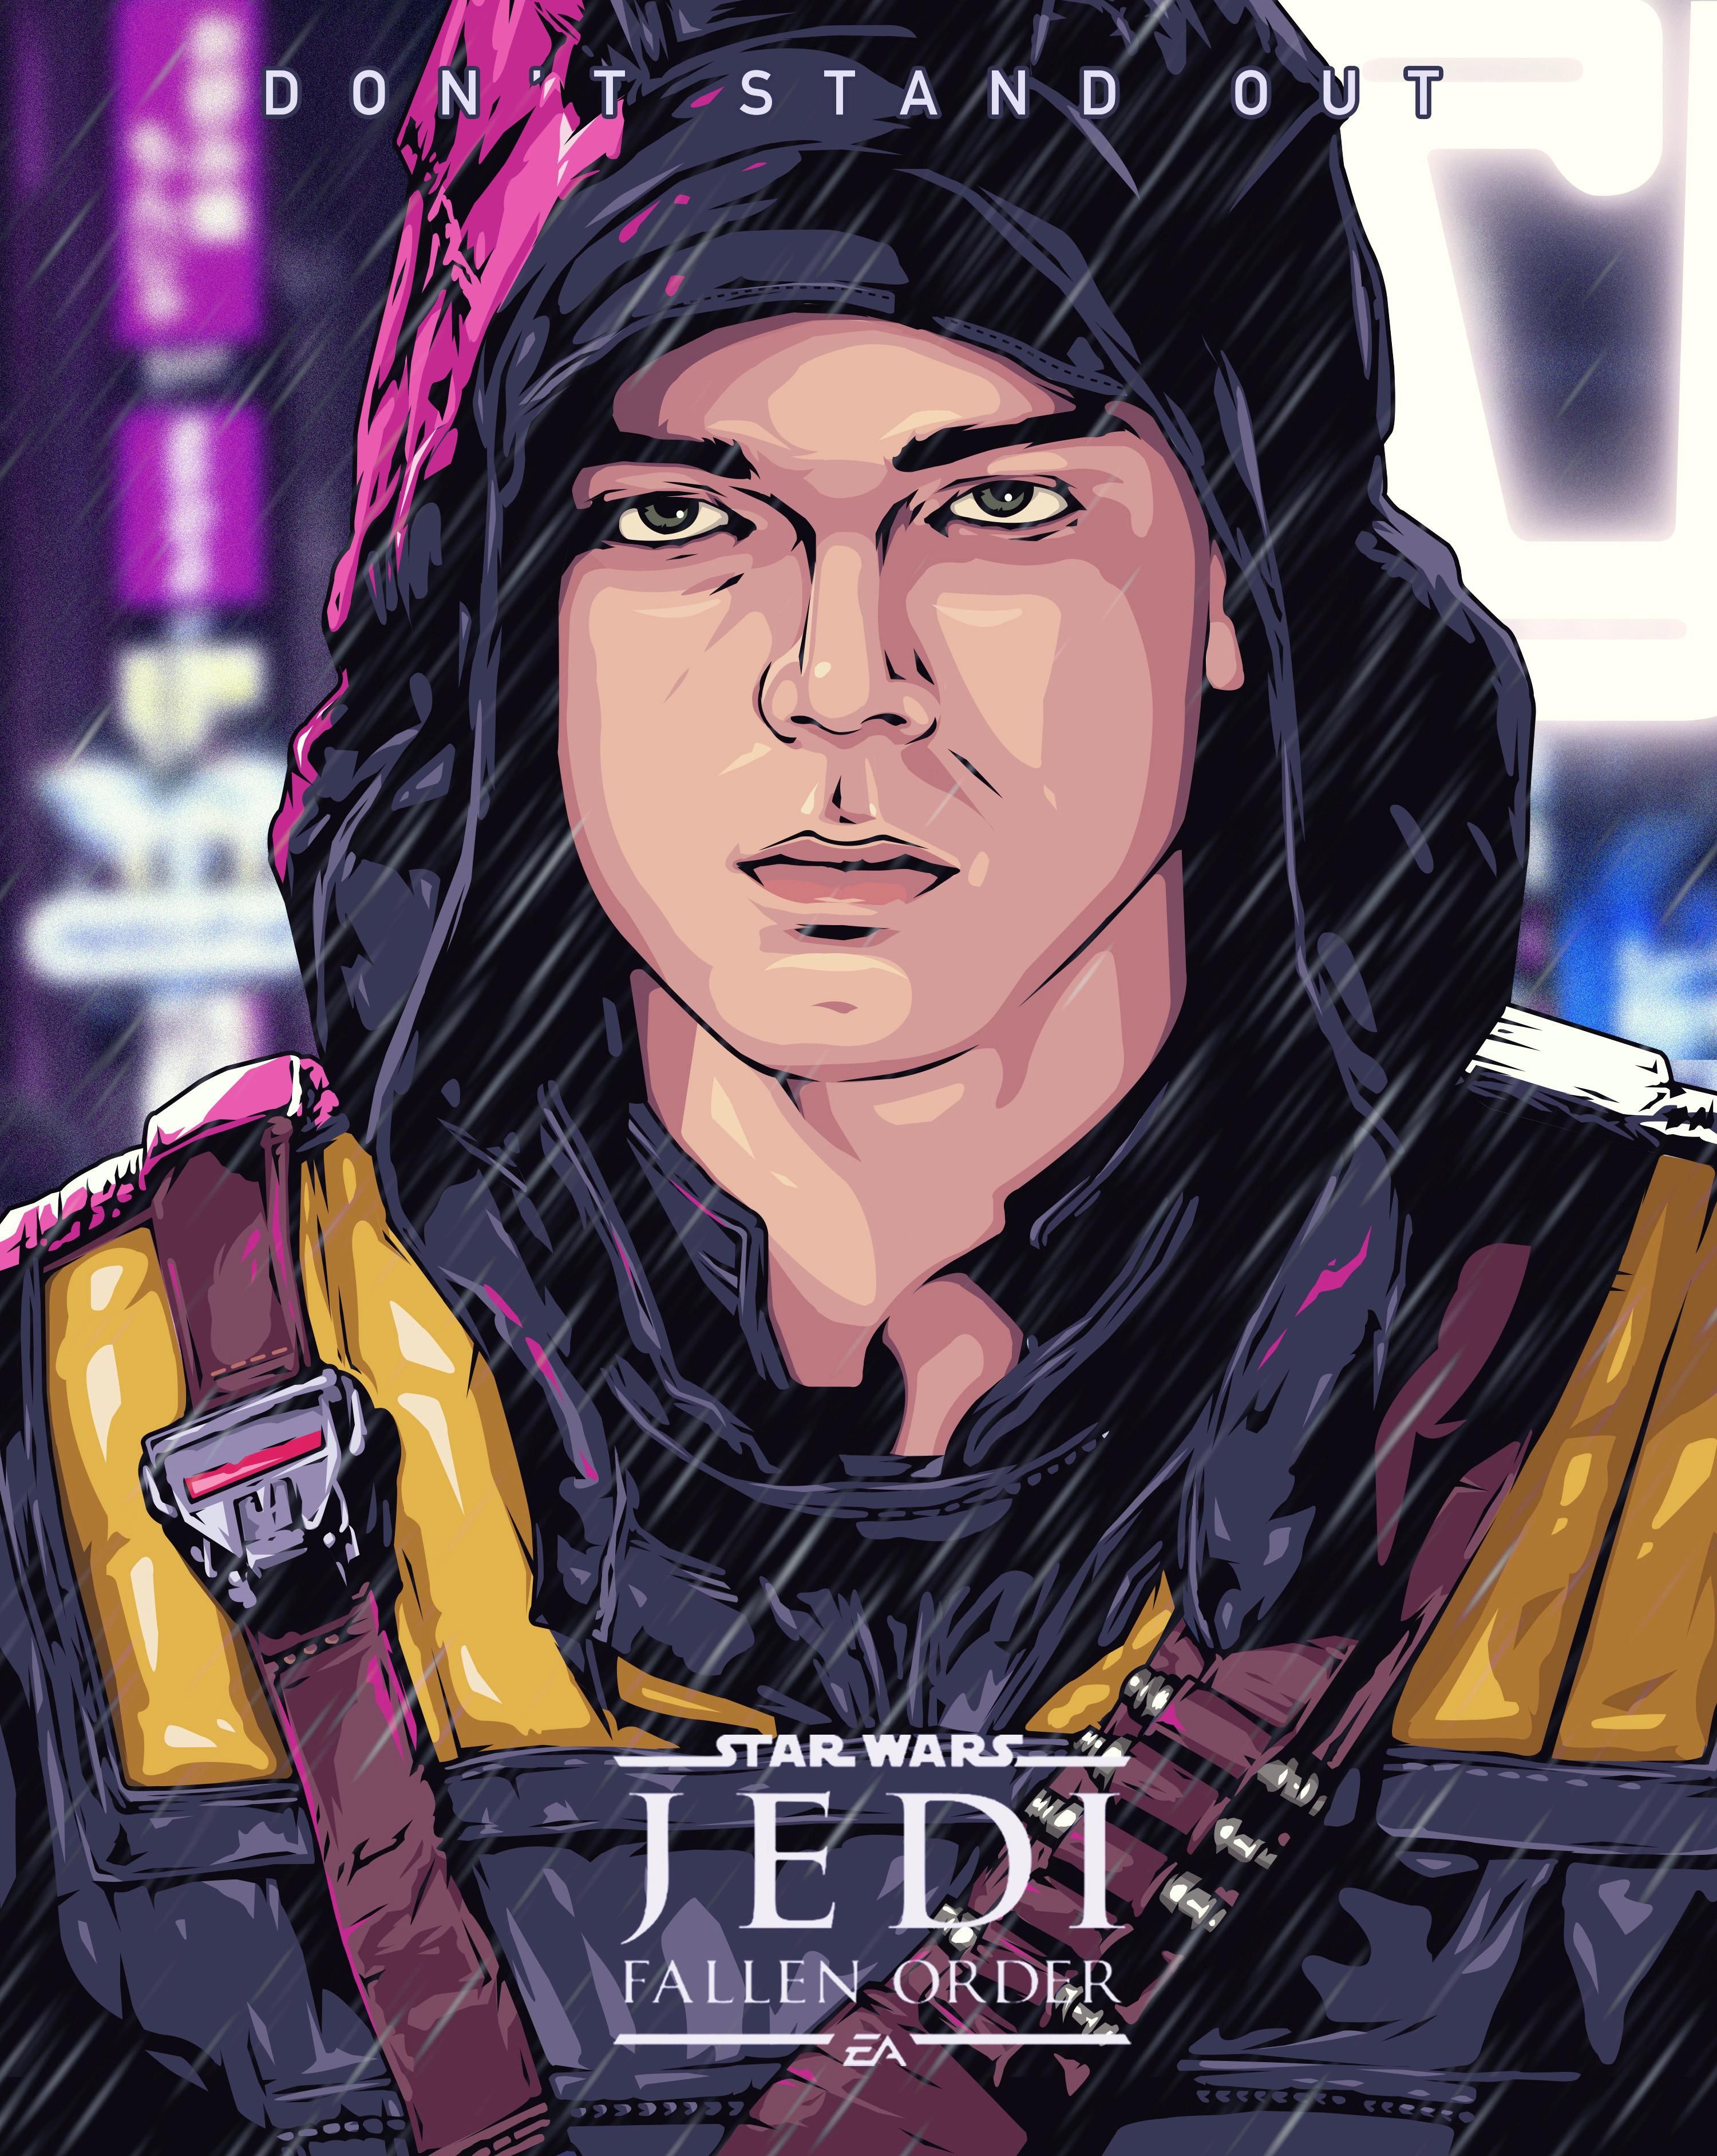 Some new art. Cal Kestis from Jedi: Fallen Order! /2MwziAr. Star wars picture, Star wars jedi, Star wars fallen order